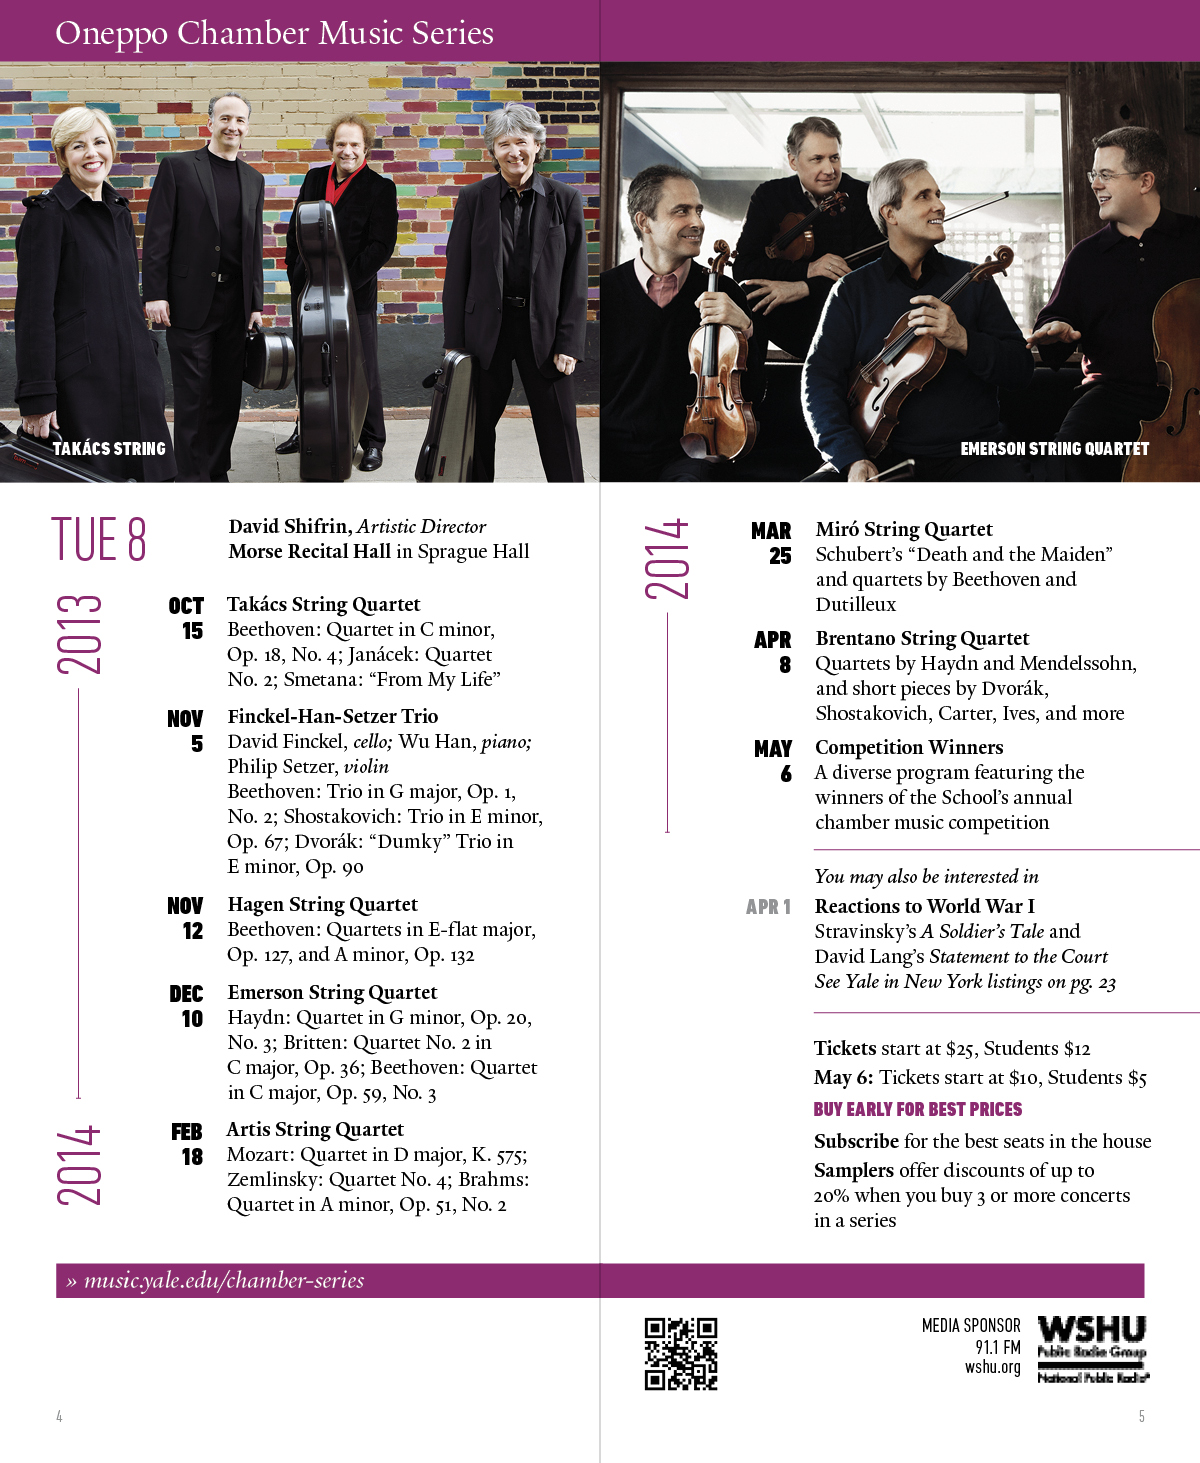 Music at Yale University Season Program / Schedule /Calendar by Granite Bay Graphic Design